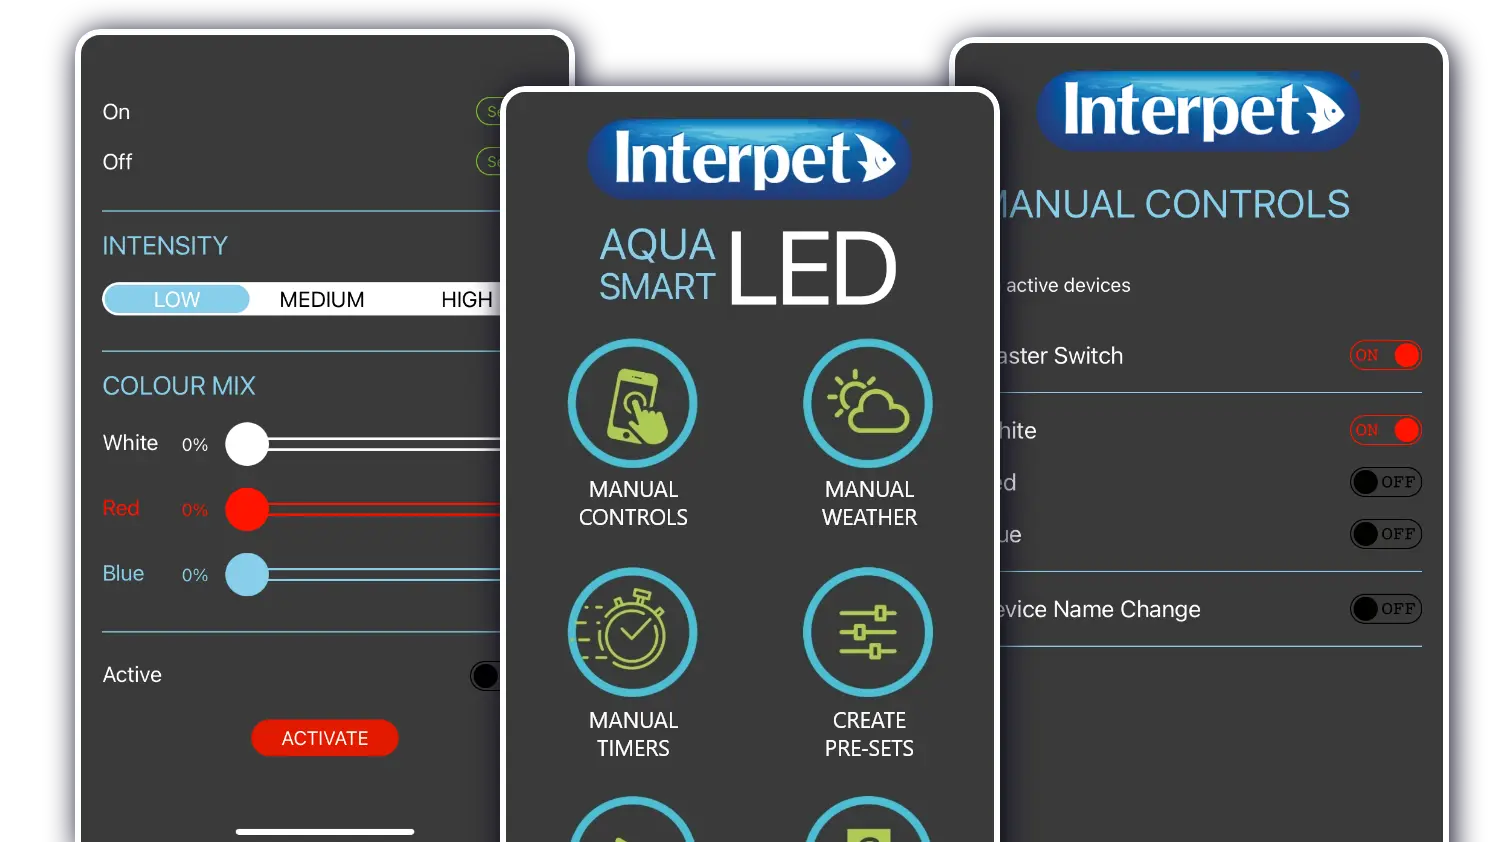 Mobile Apps - Interpet Aqua Smart Led